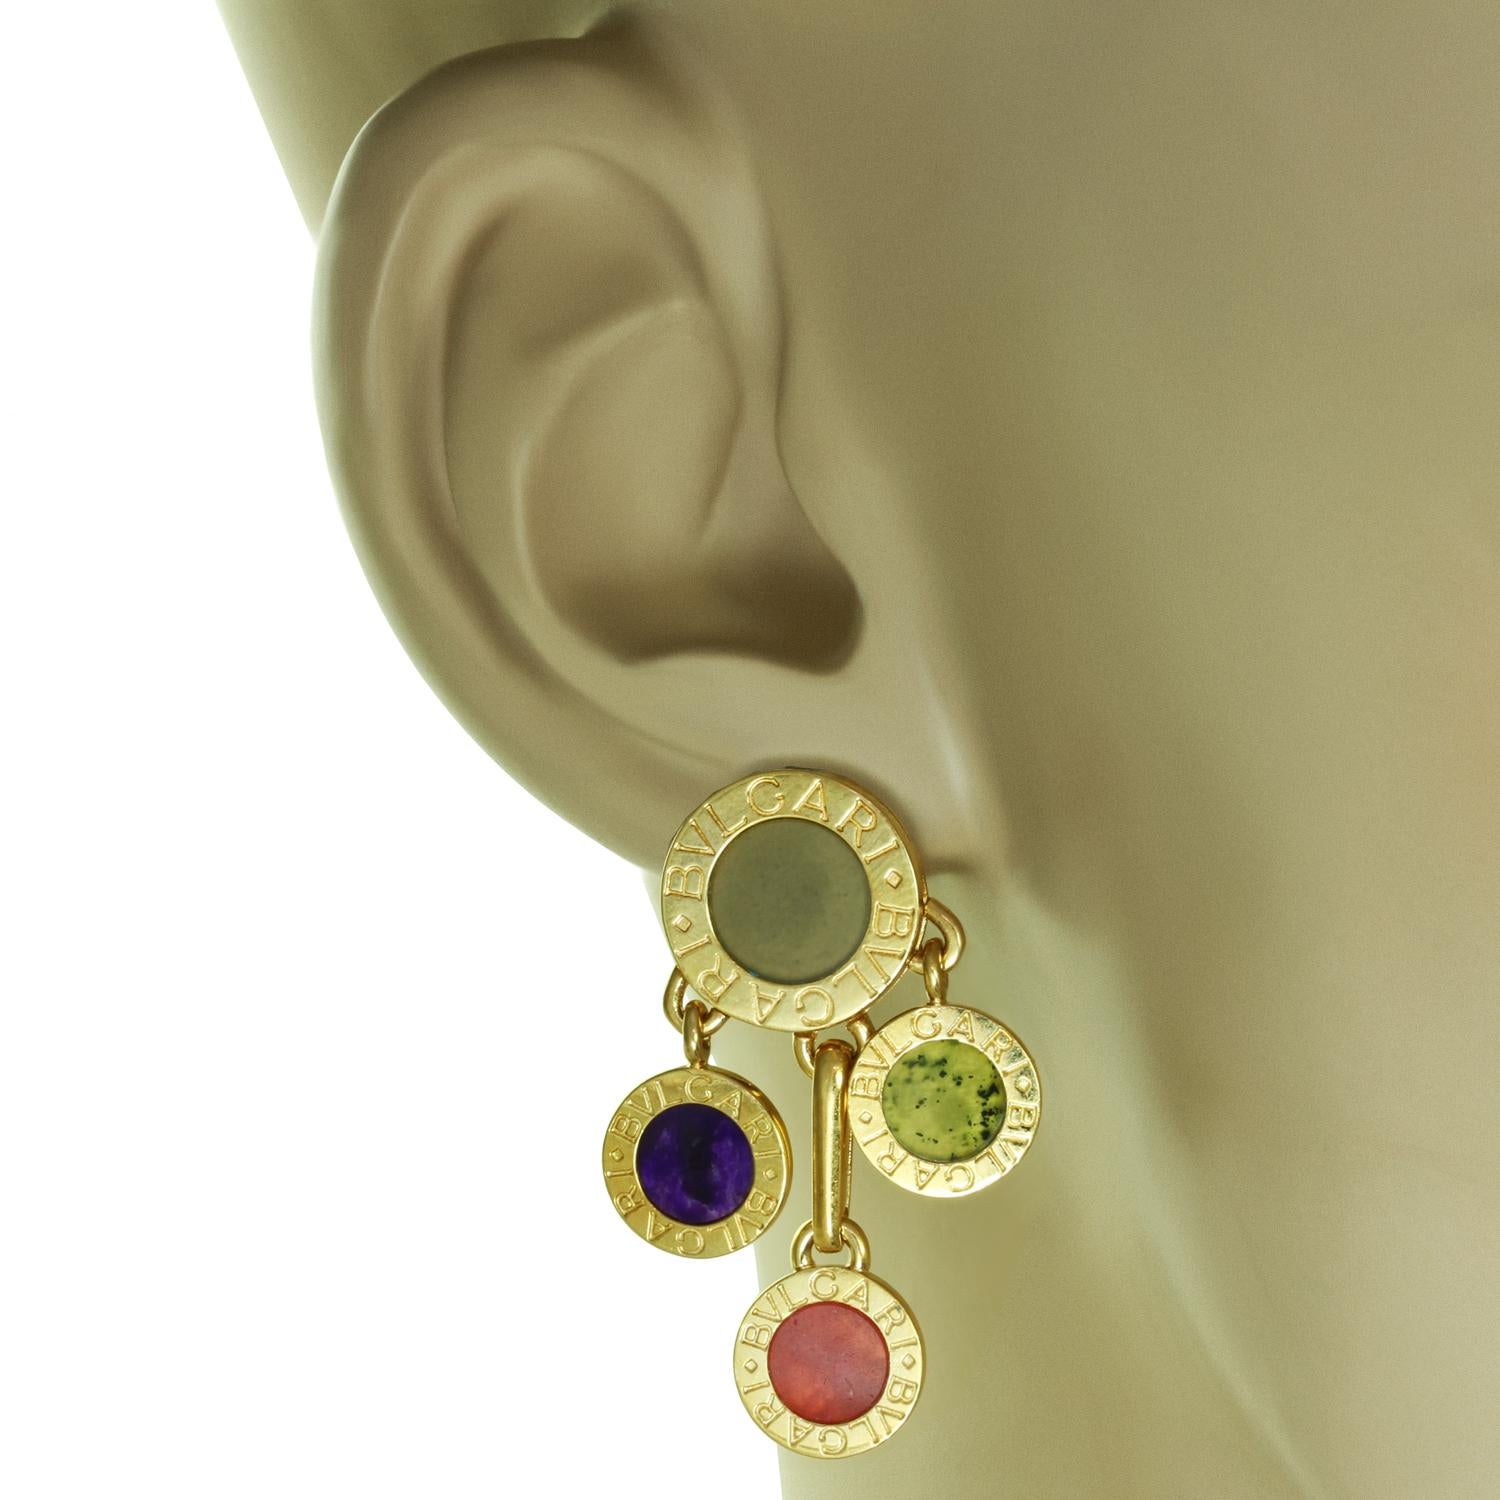 bvlgari green earrings